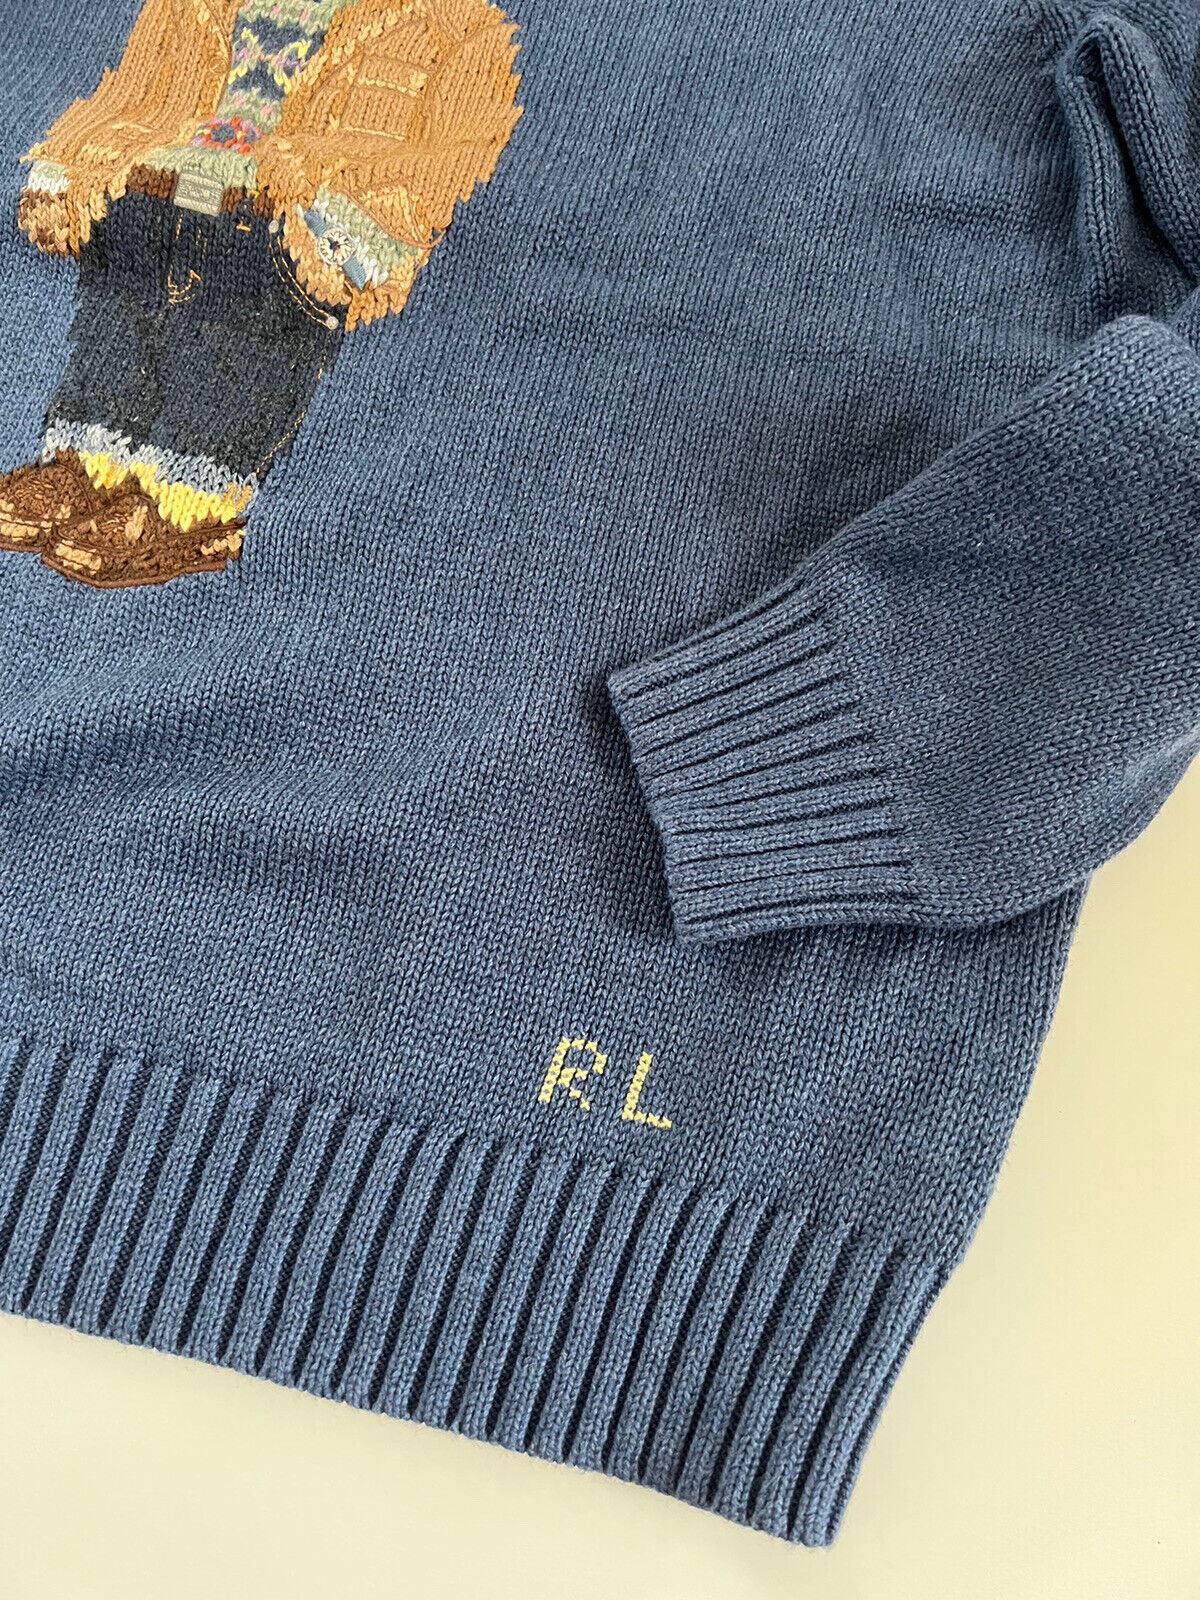 NWT $398 Polo Ralph Lauren Bear Cotton Blue Sweatshirt 2XL